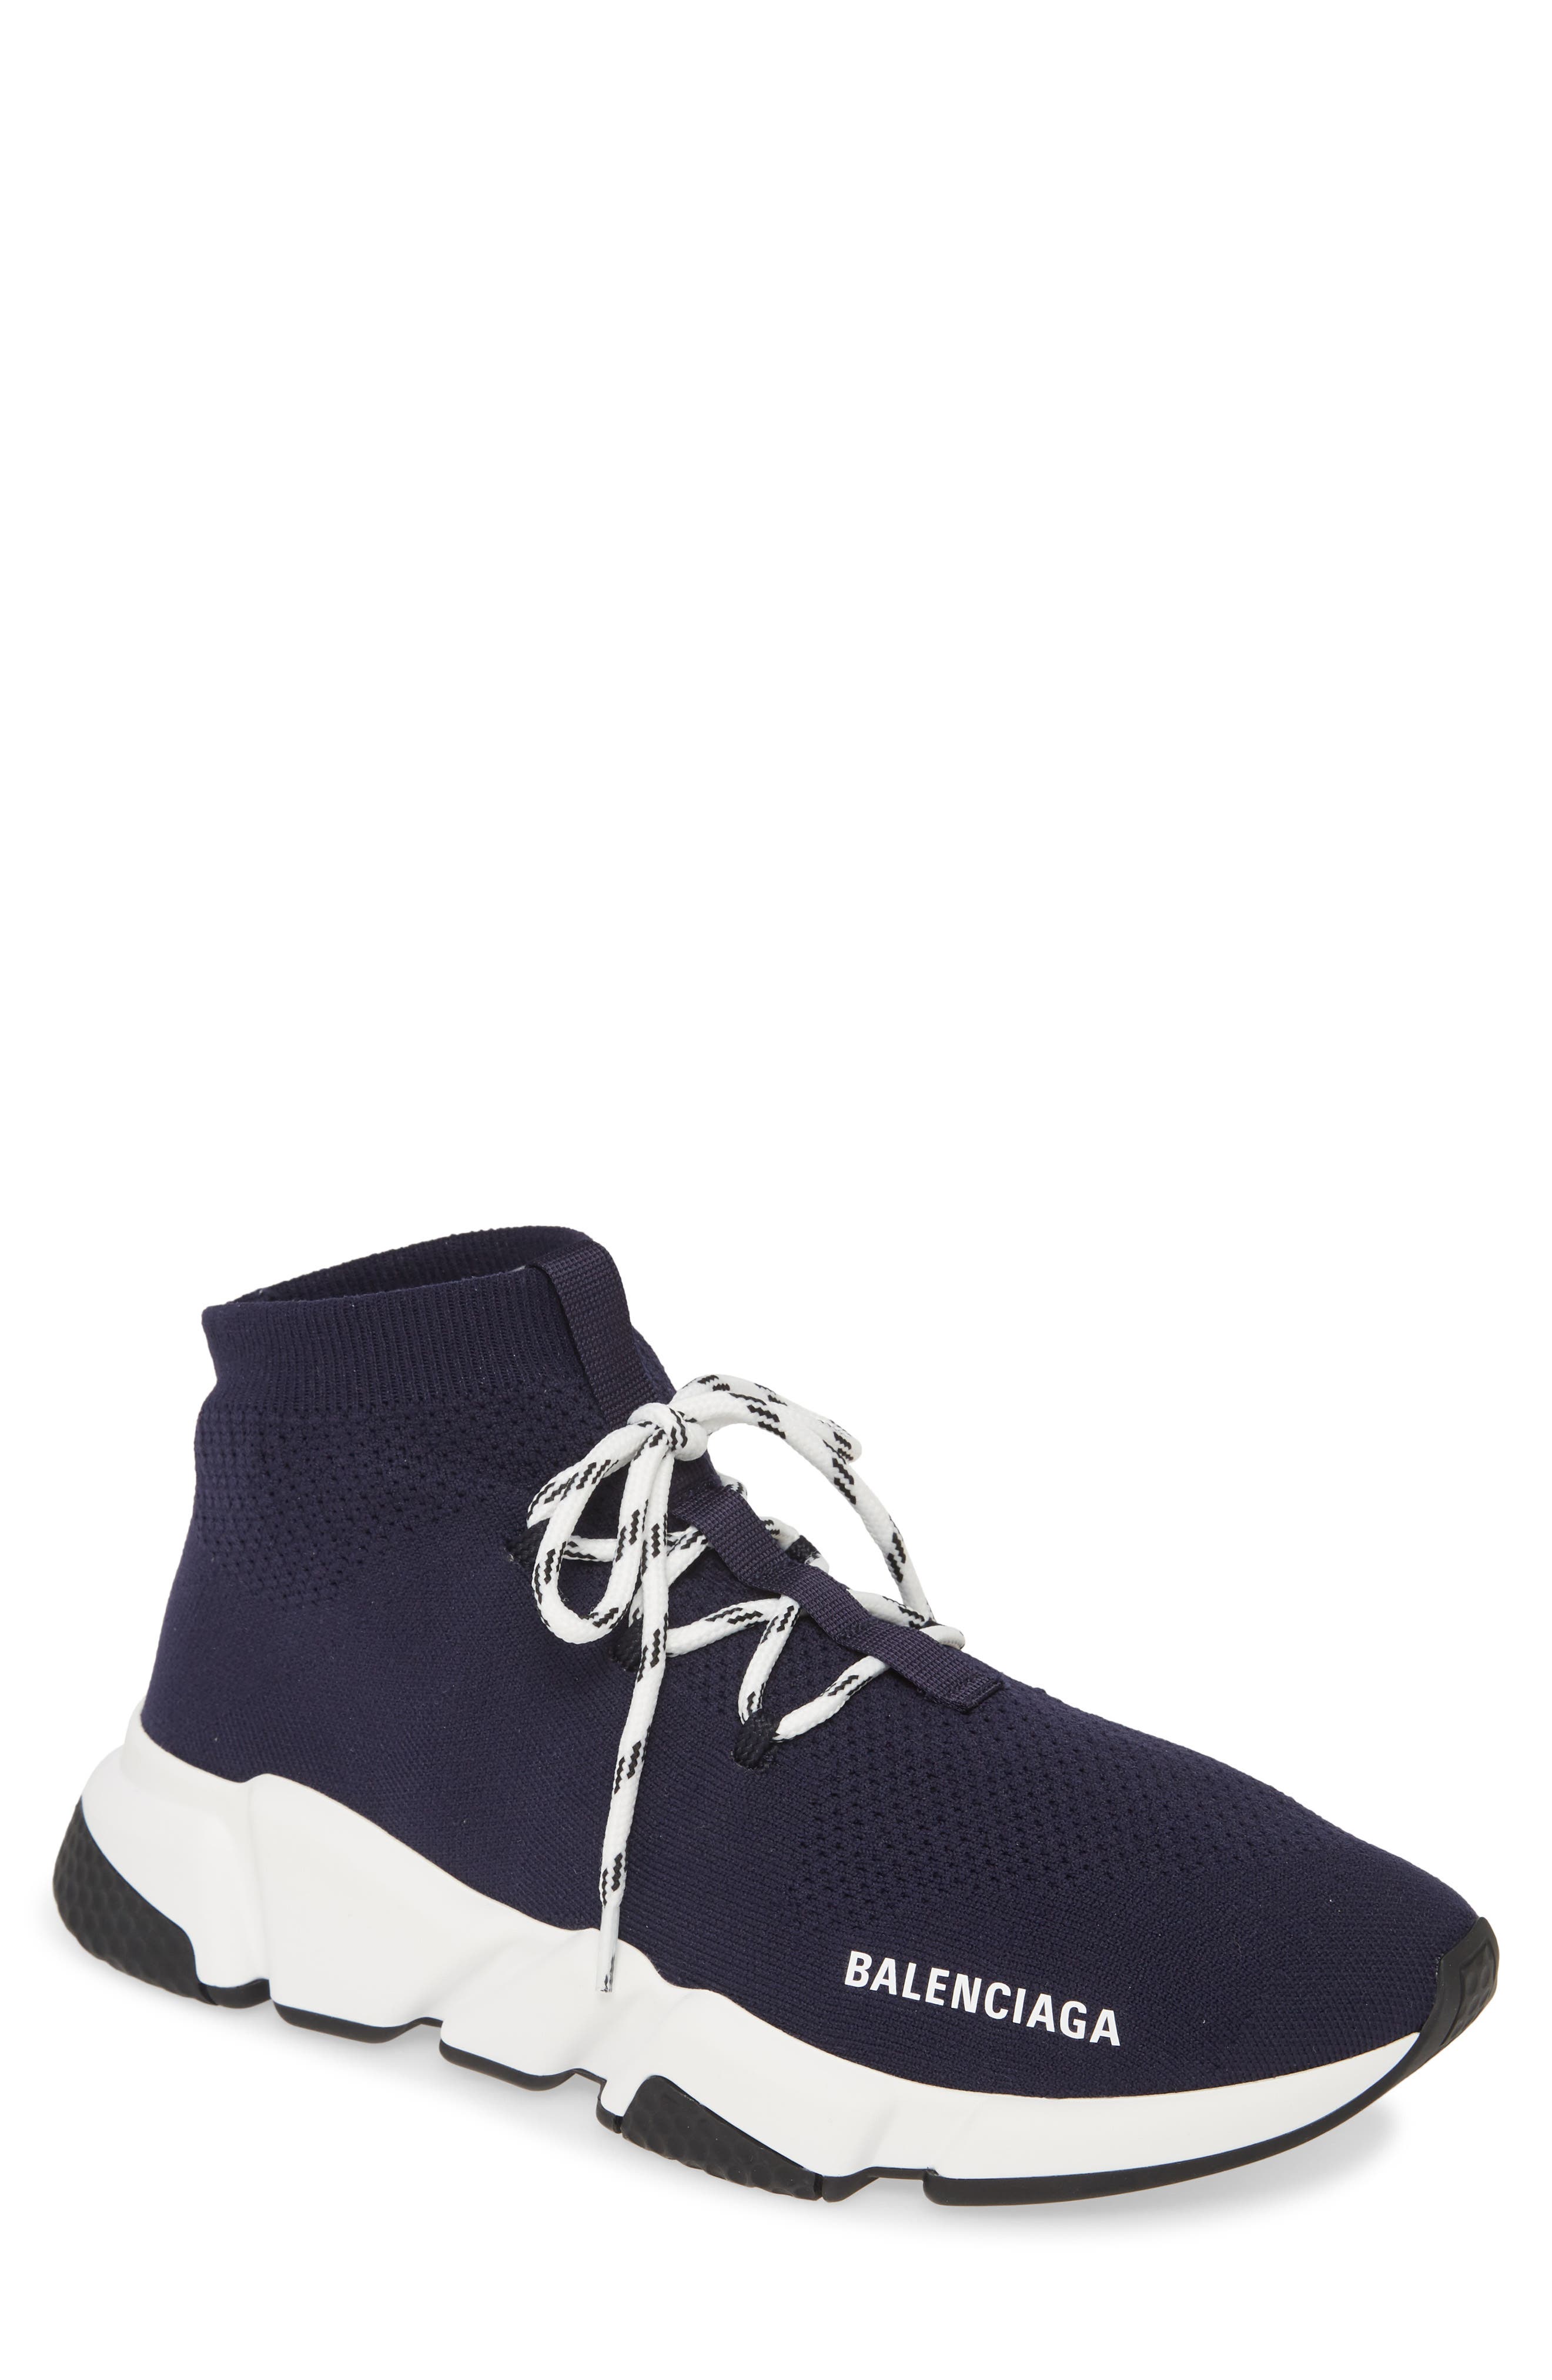 Balenciaga Black and Grey Track Sneakers 191342F12800303